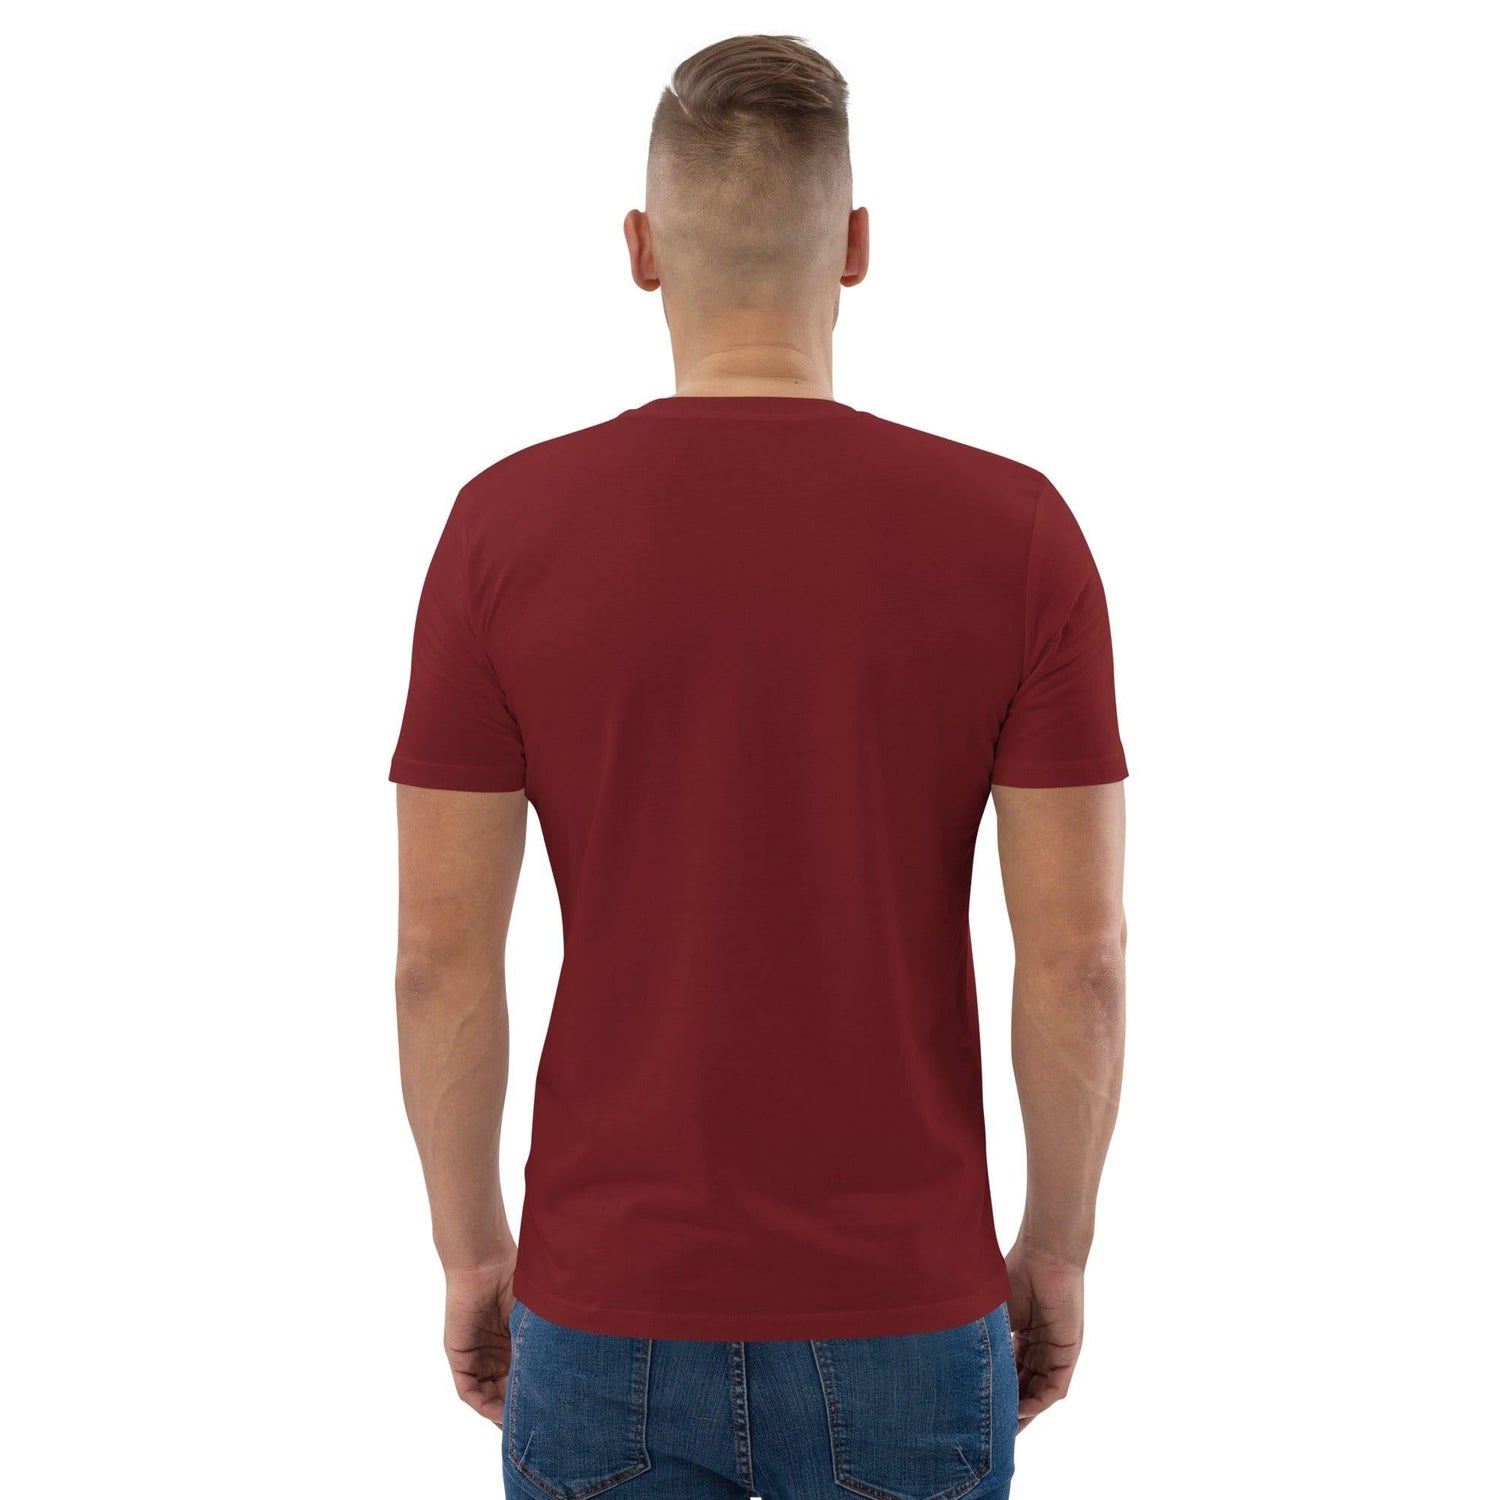 Herren T-Shirts S-5XL - Preis: € 28.79 - BUYATHOME24 Germany